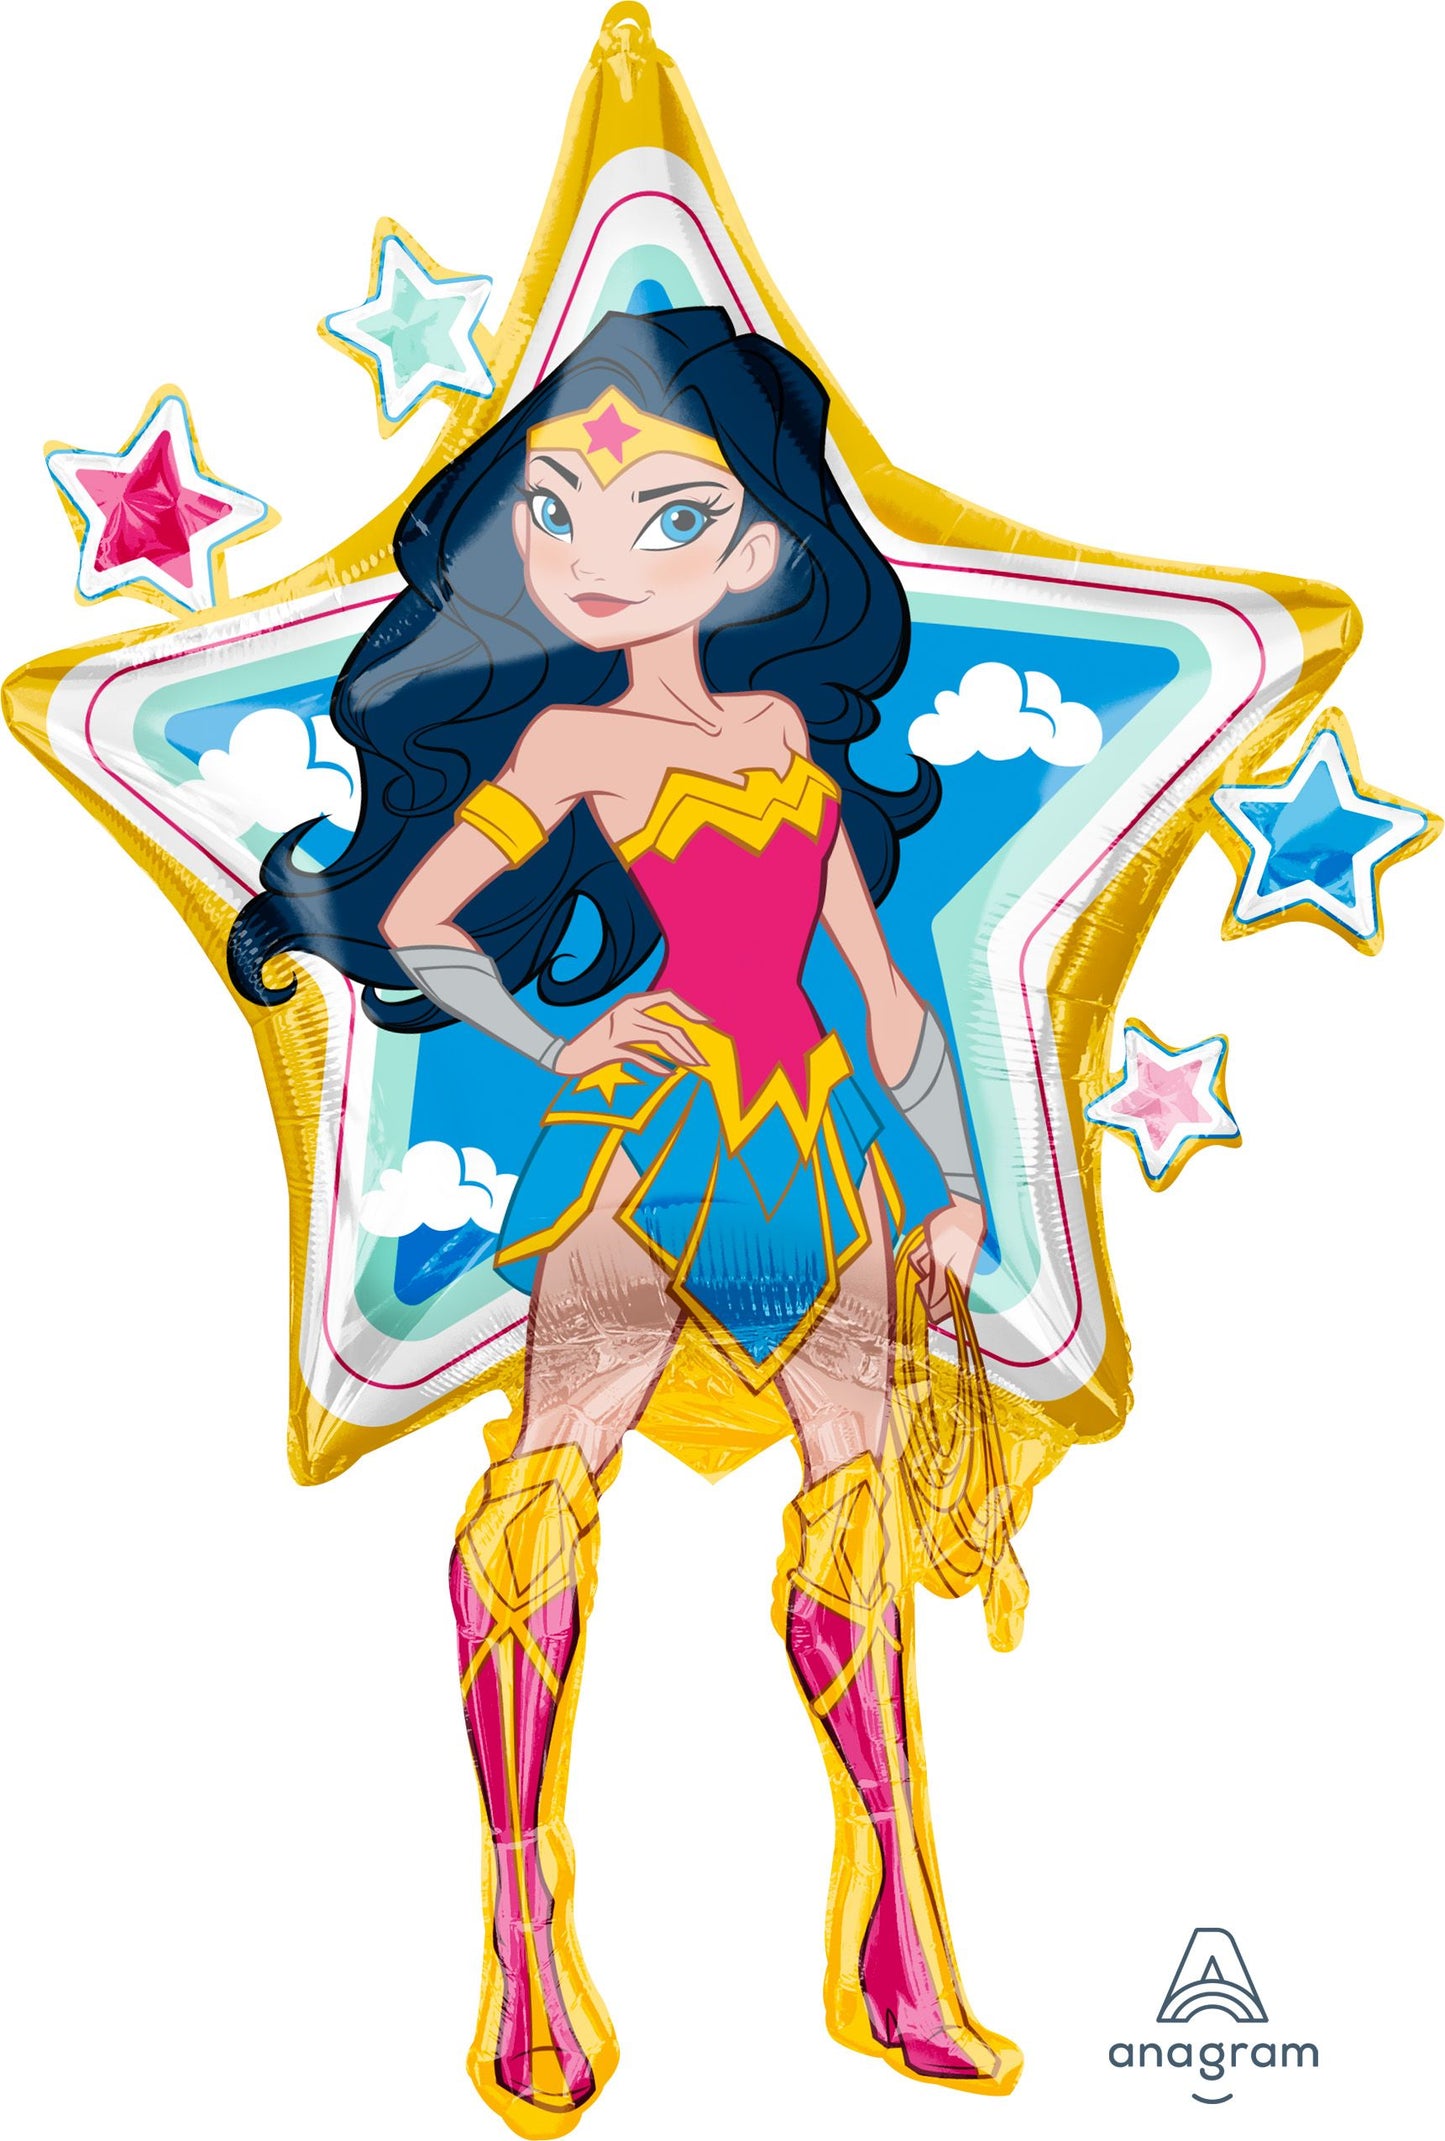 Wonder Woman Supershape Foil Balloon